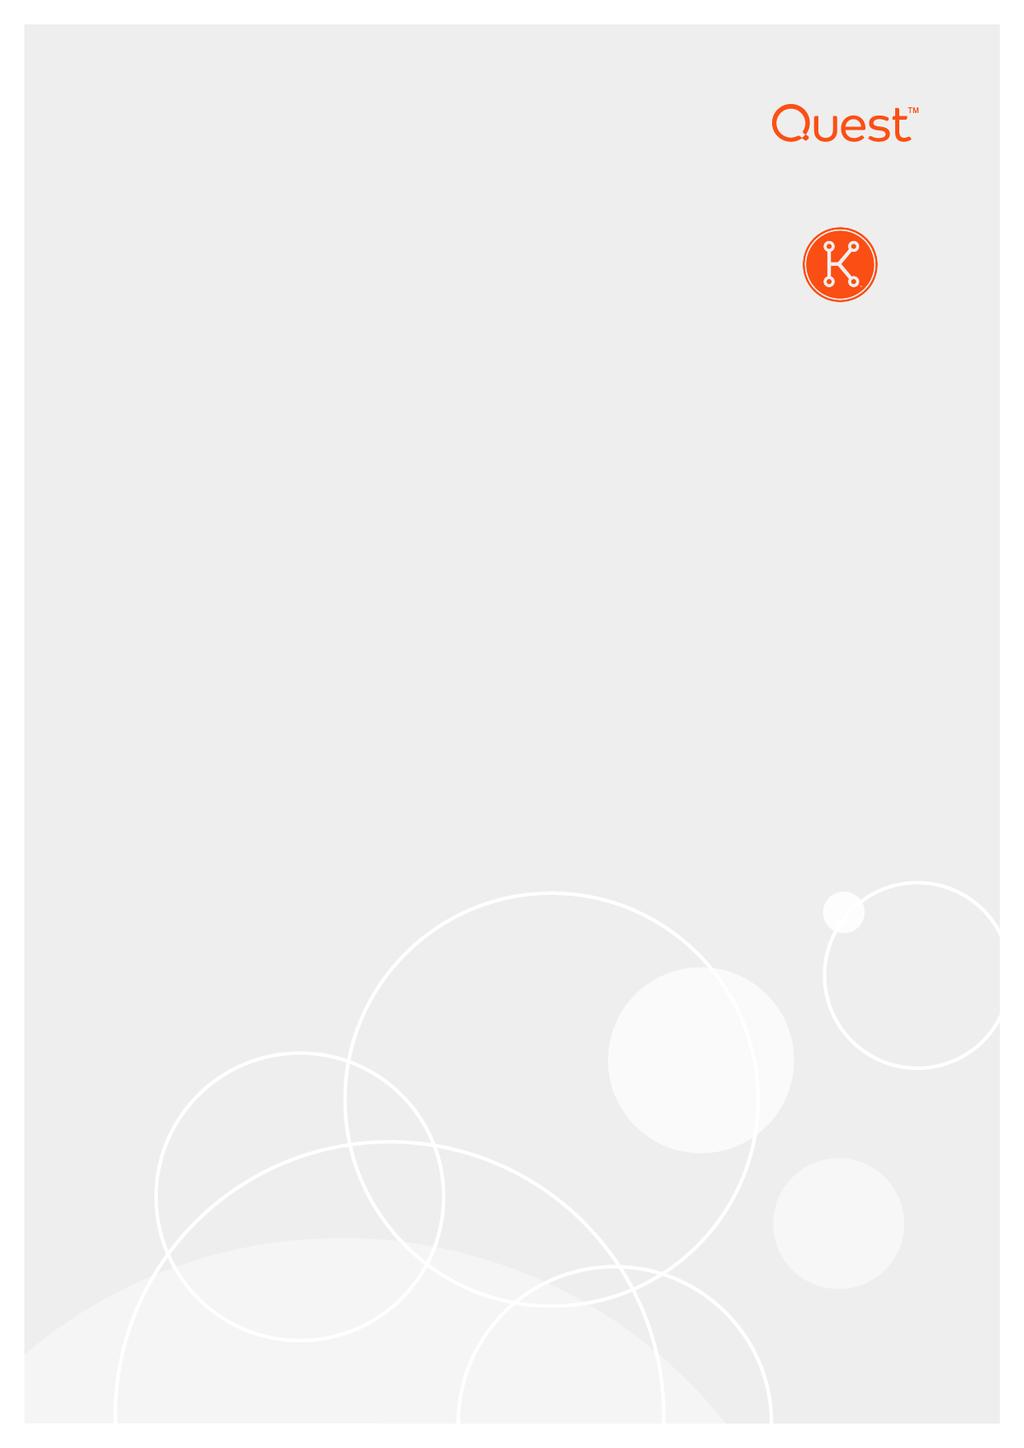 KACE GO Mobile App 5.